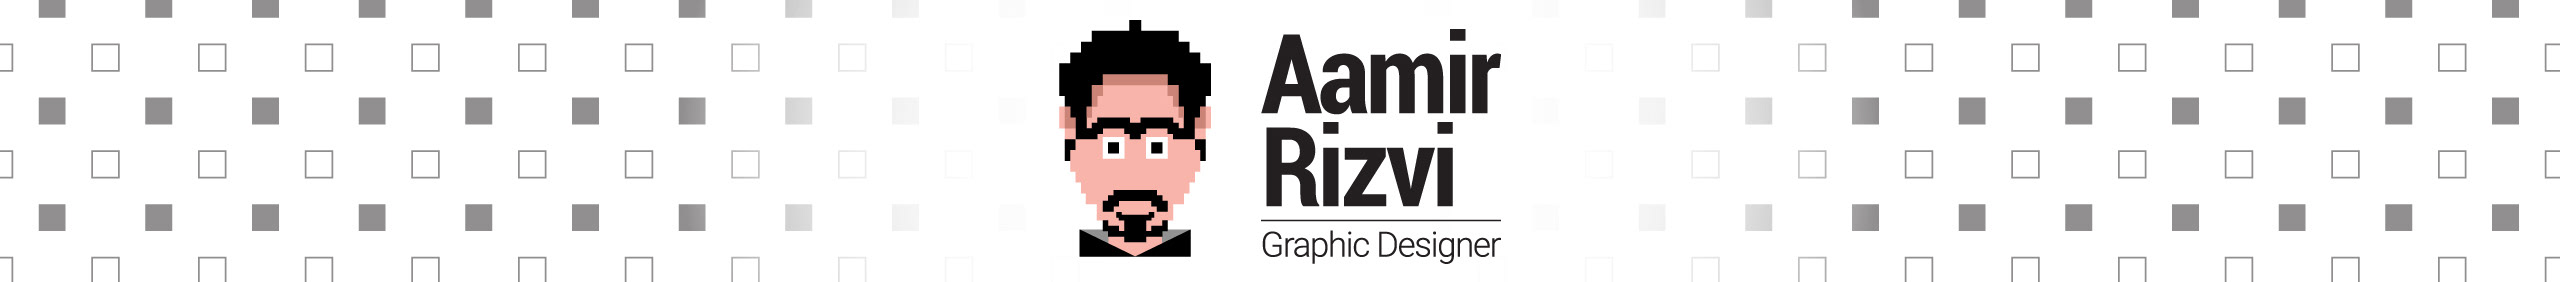 Баннер профиля Aamir Rizvi